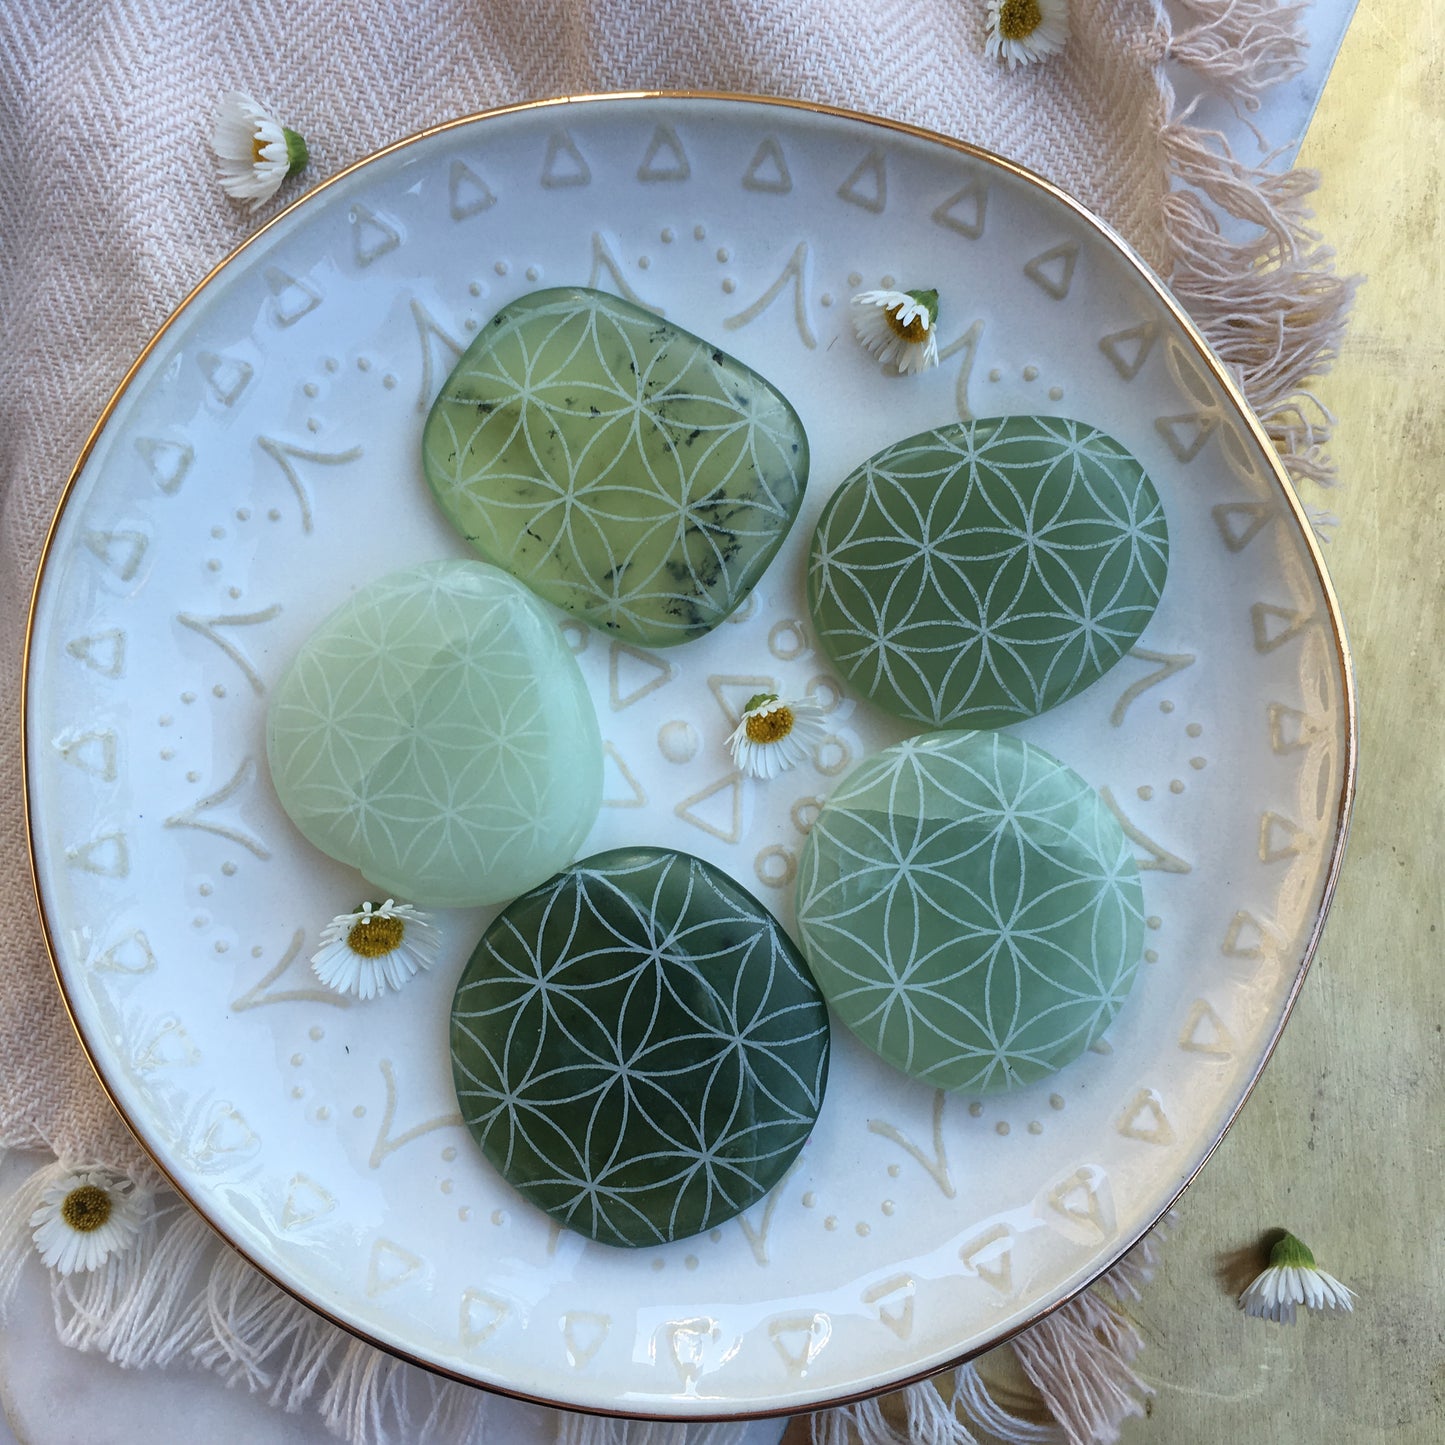 Jade Pocket Stone Etched with Mandala or Sacred Geometry